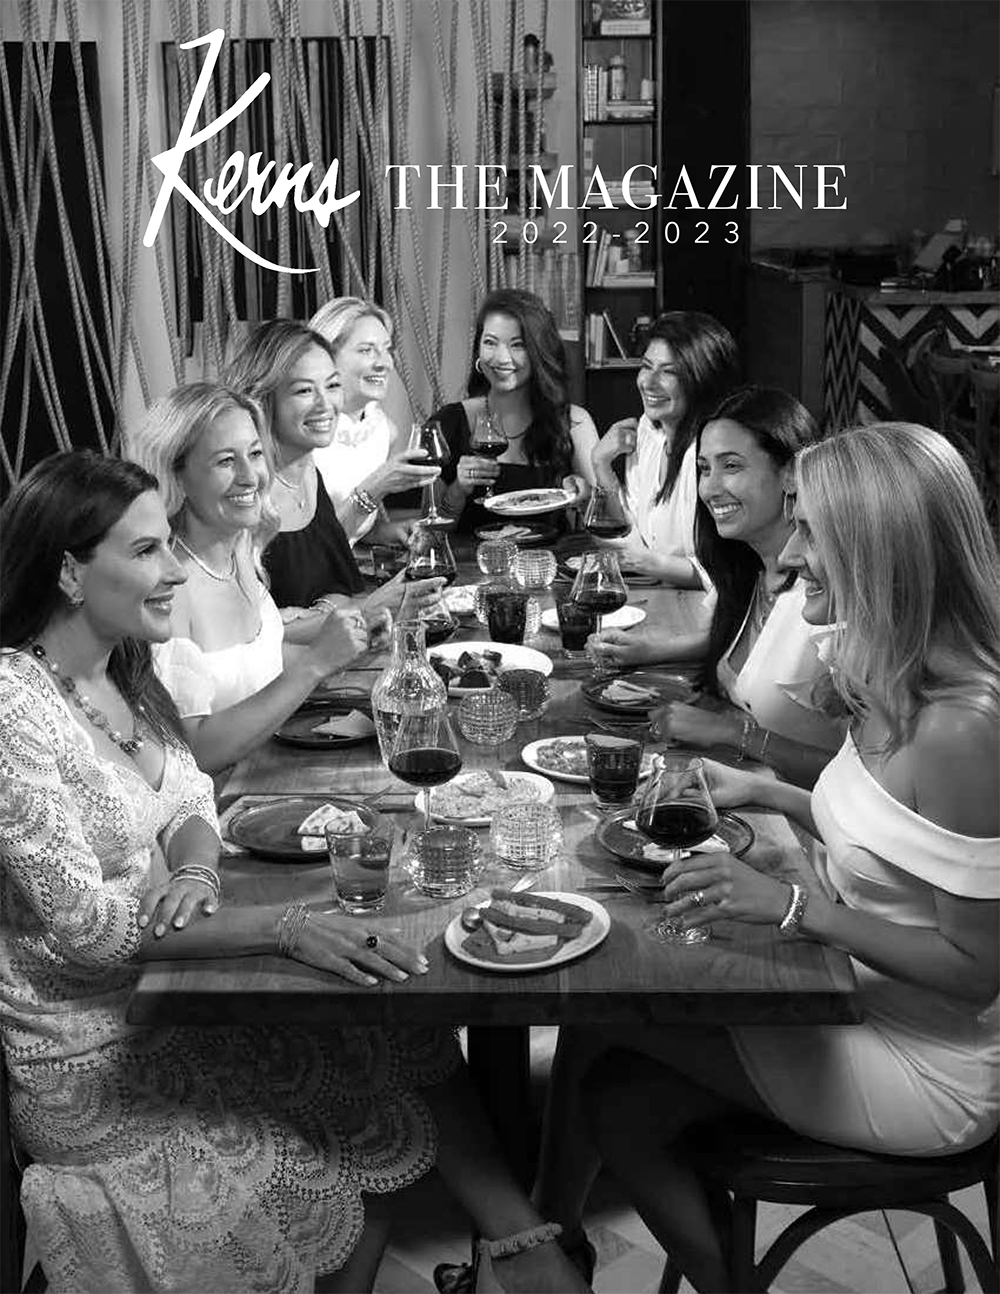 Kerns The Magazine – Arriving Soon!